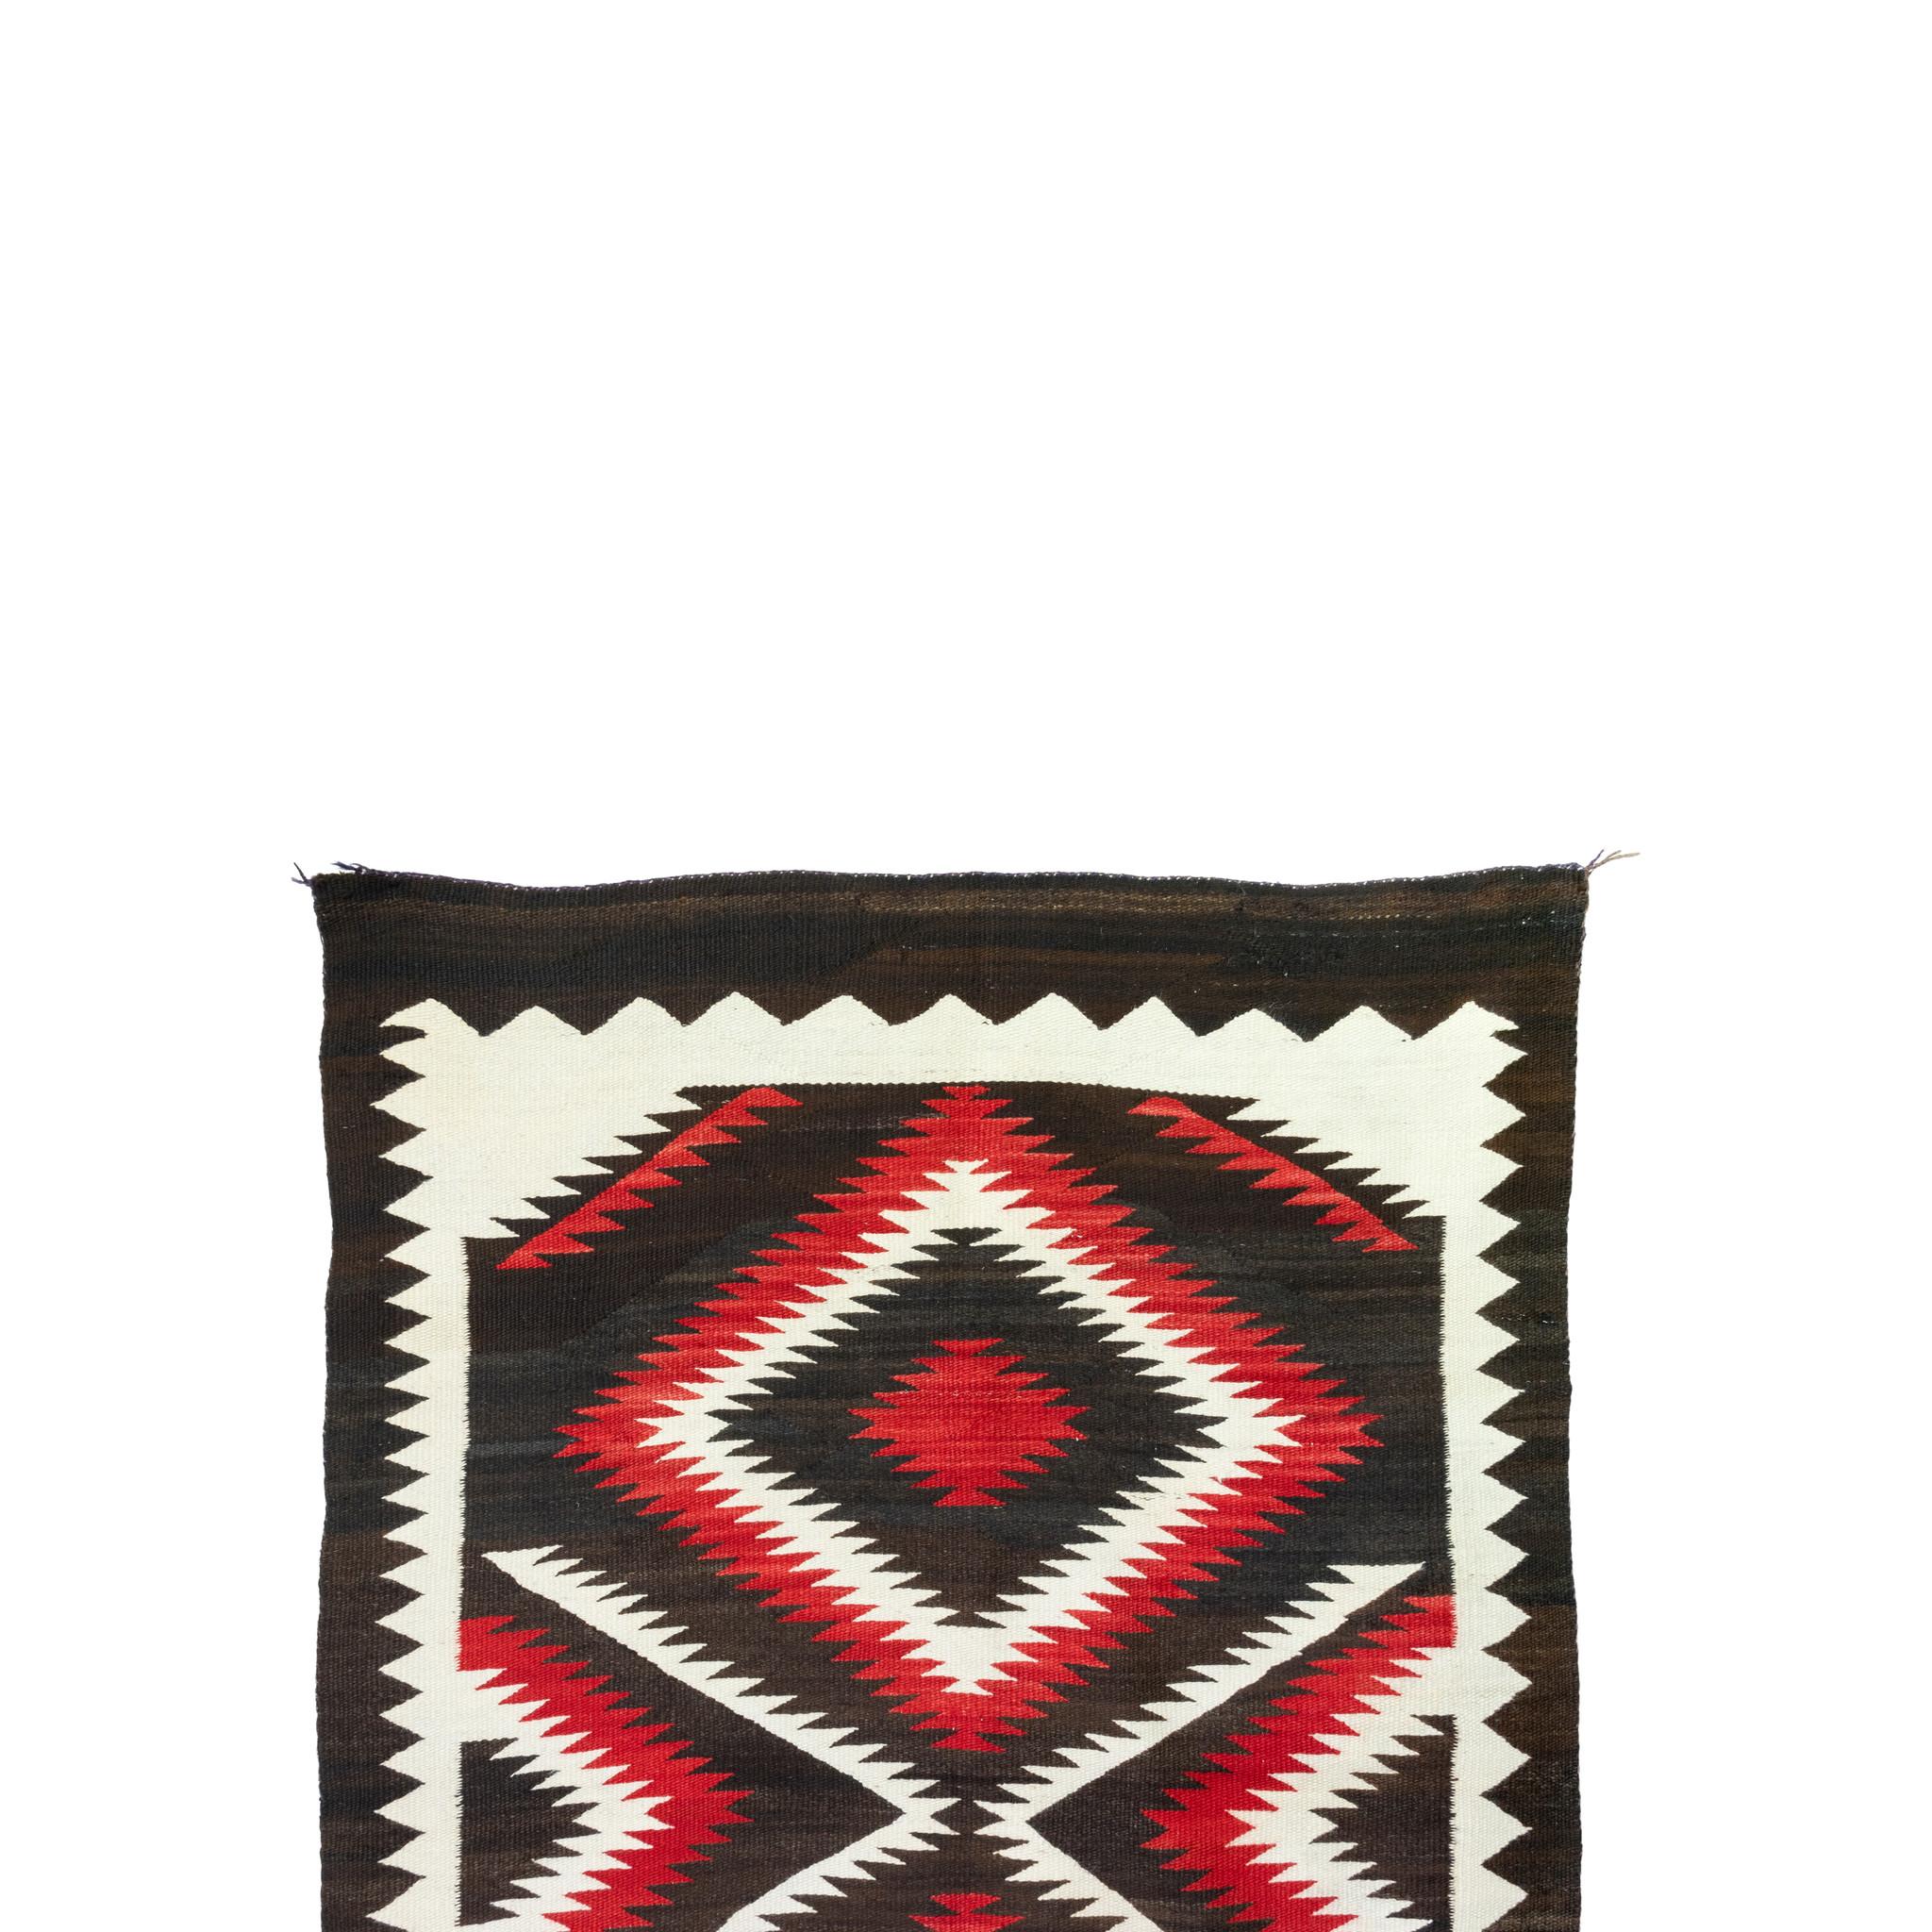 Navajo weaving with a negative dazzler design. Made of soft Merino wool. 

Origin: Navajo, Southwest
Period: circa 1920
Size: 4'6